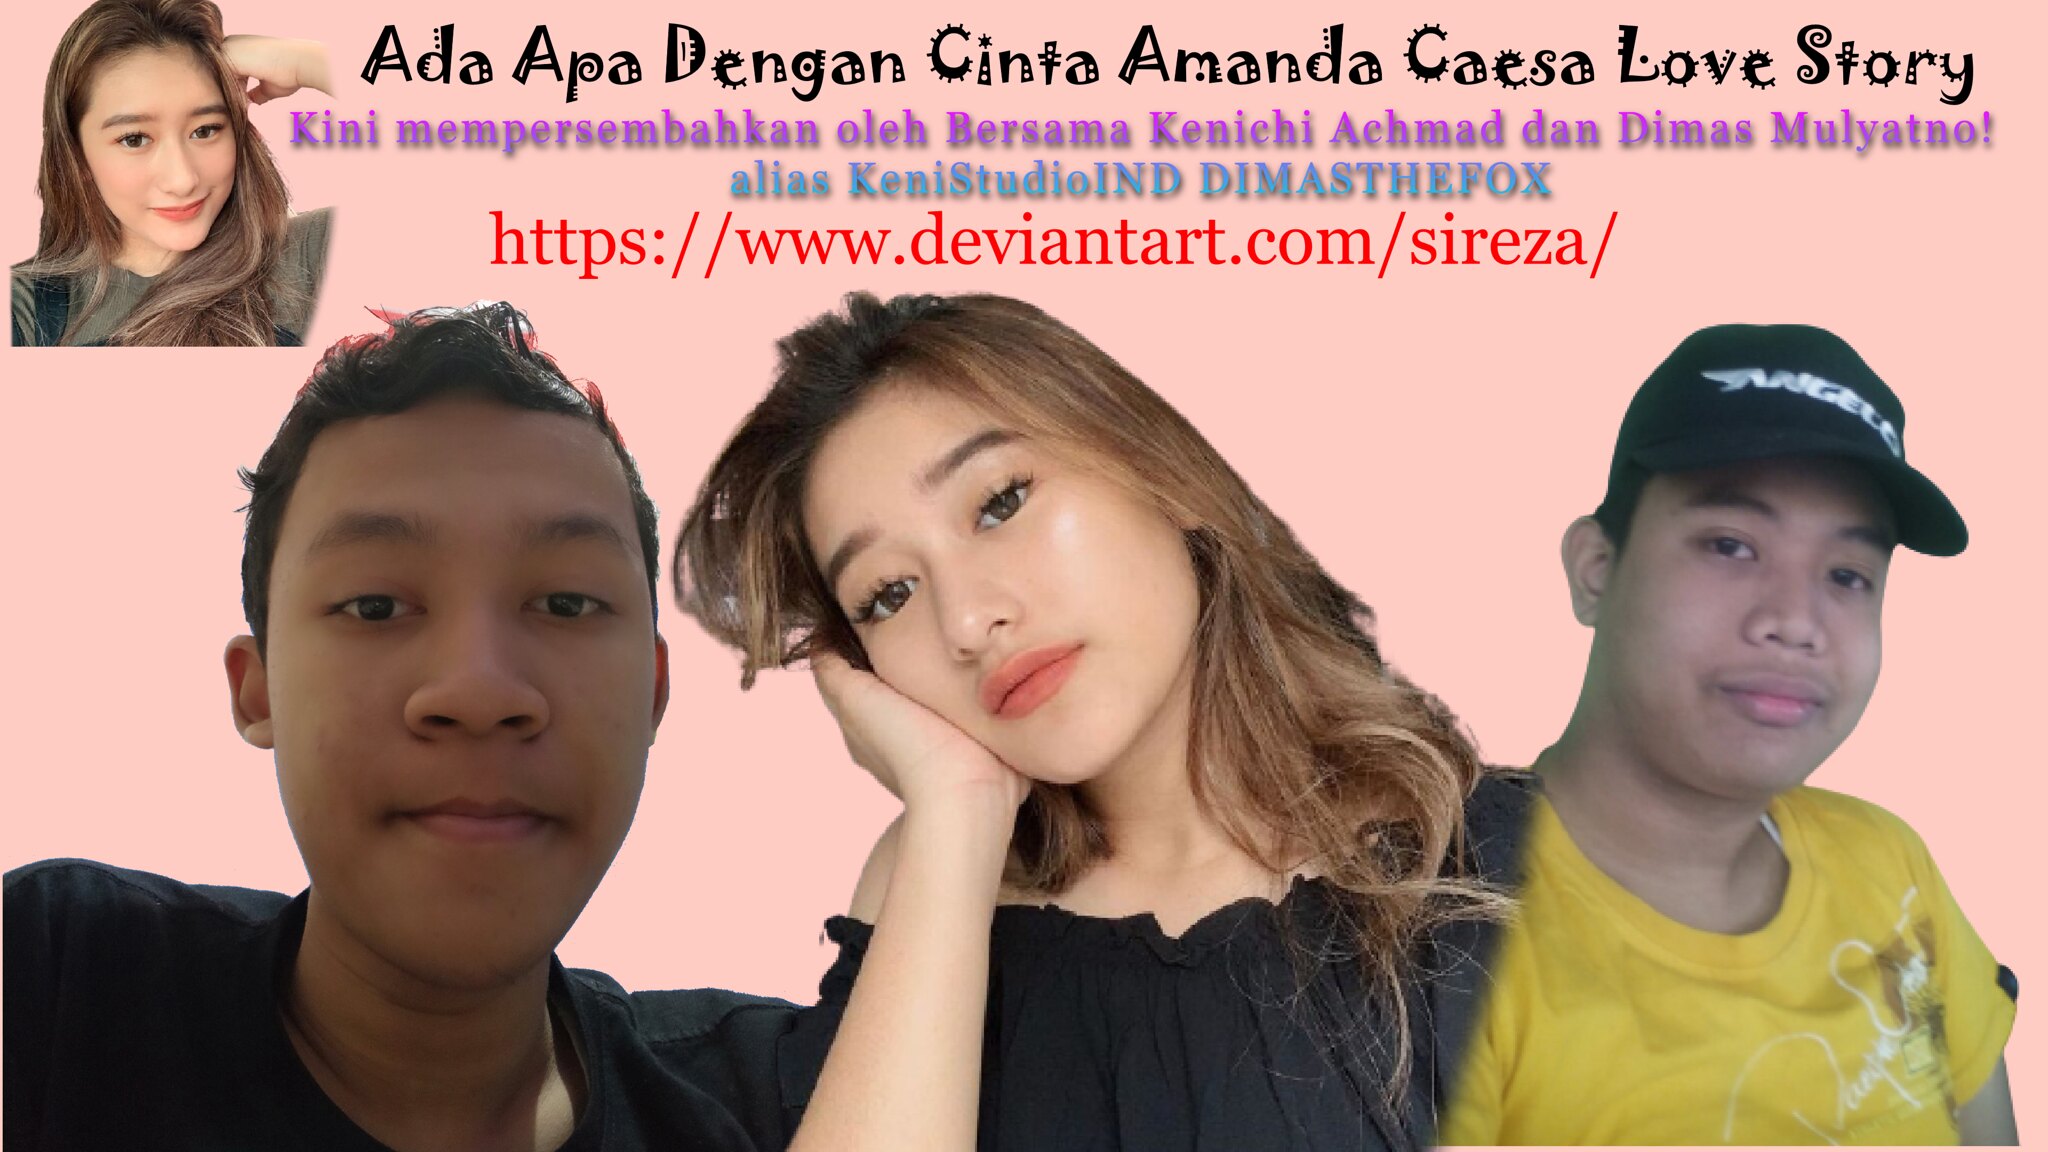 Amanda Caesa Deviantart Indonesia